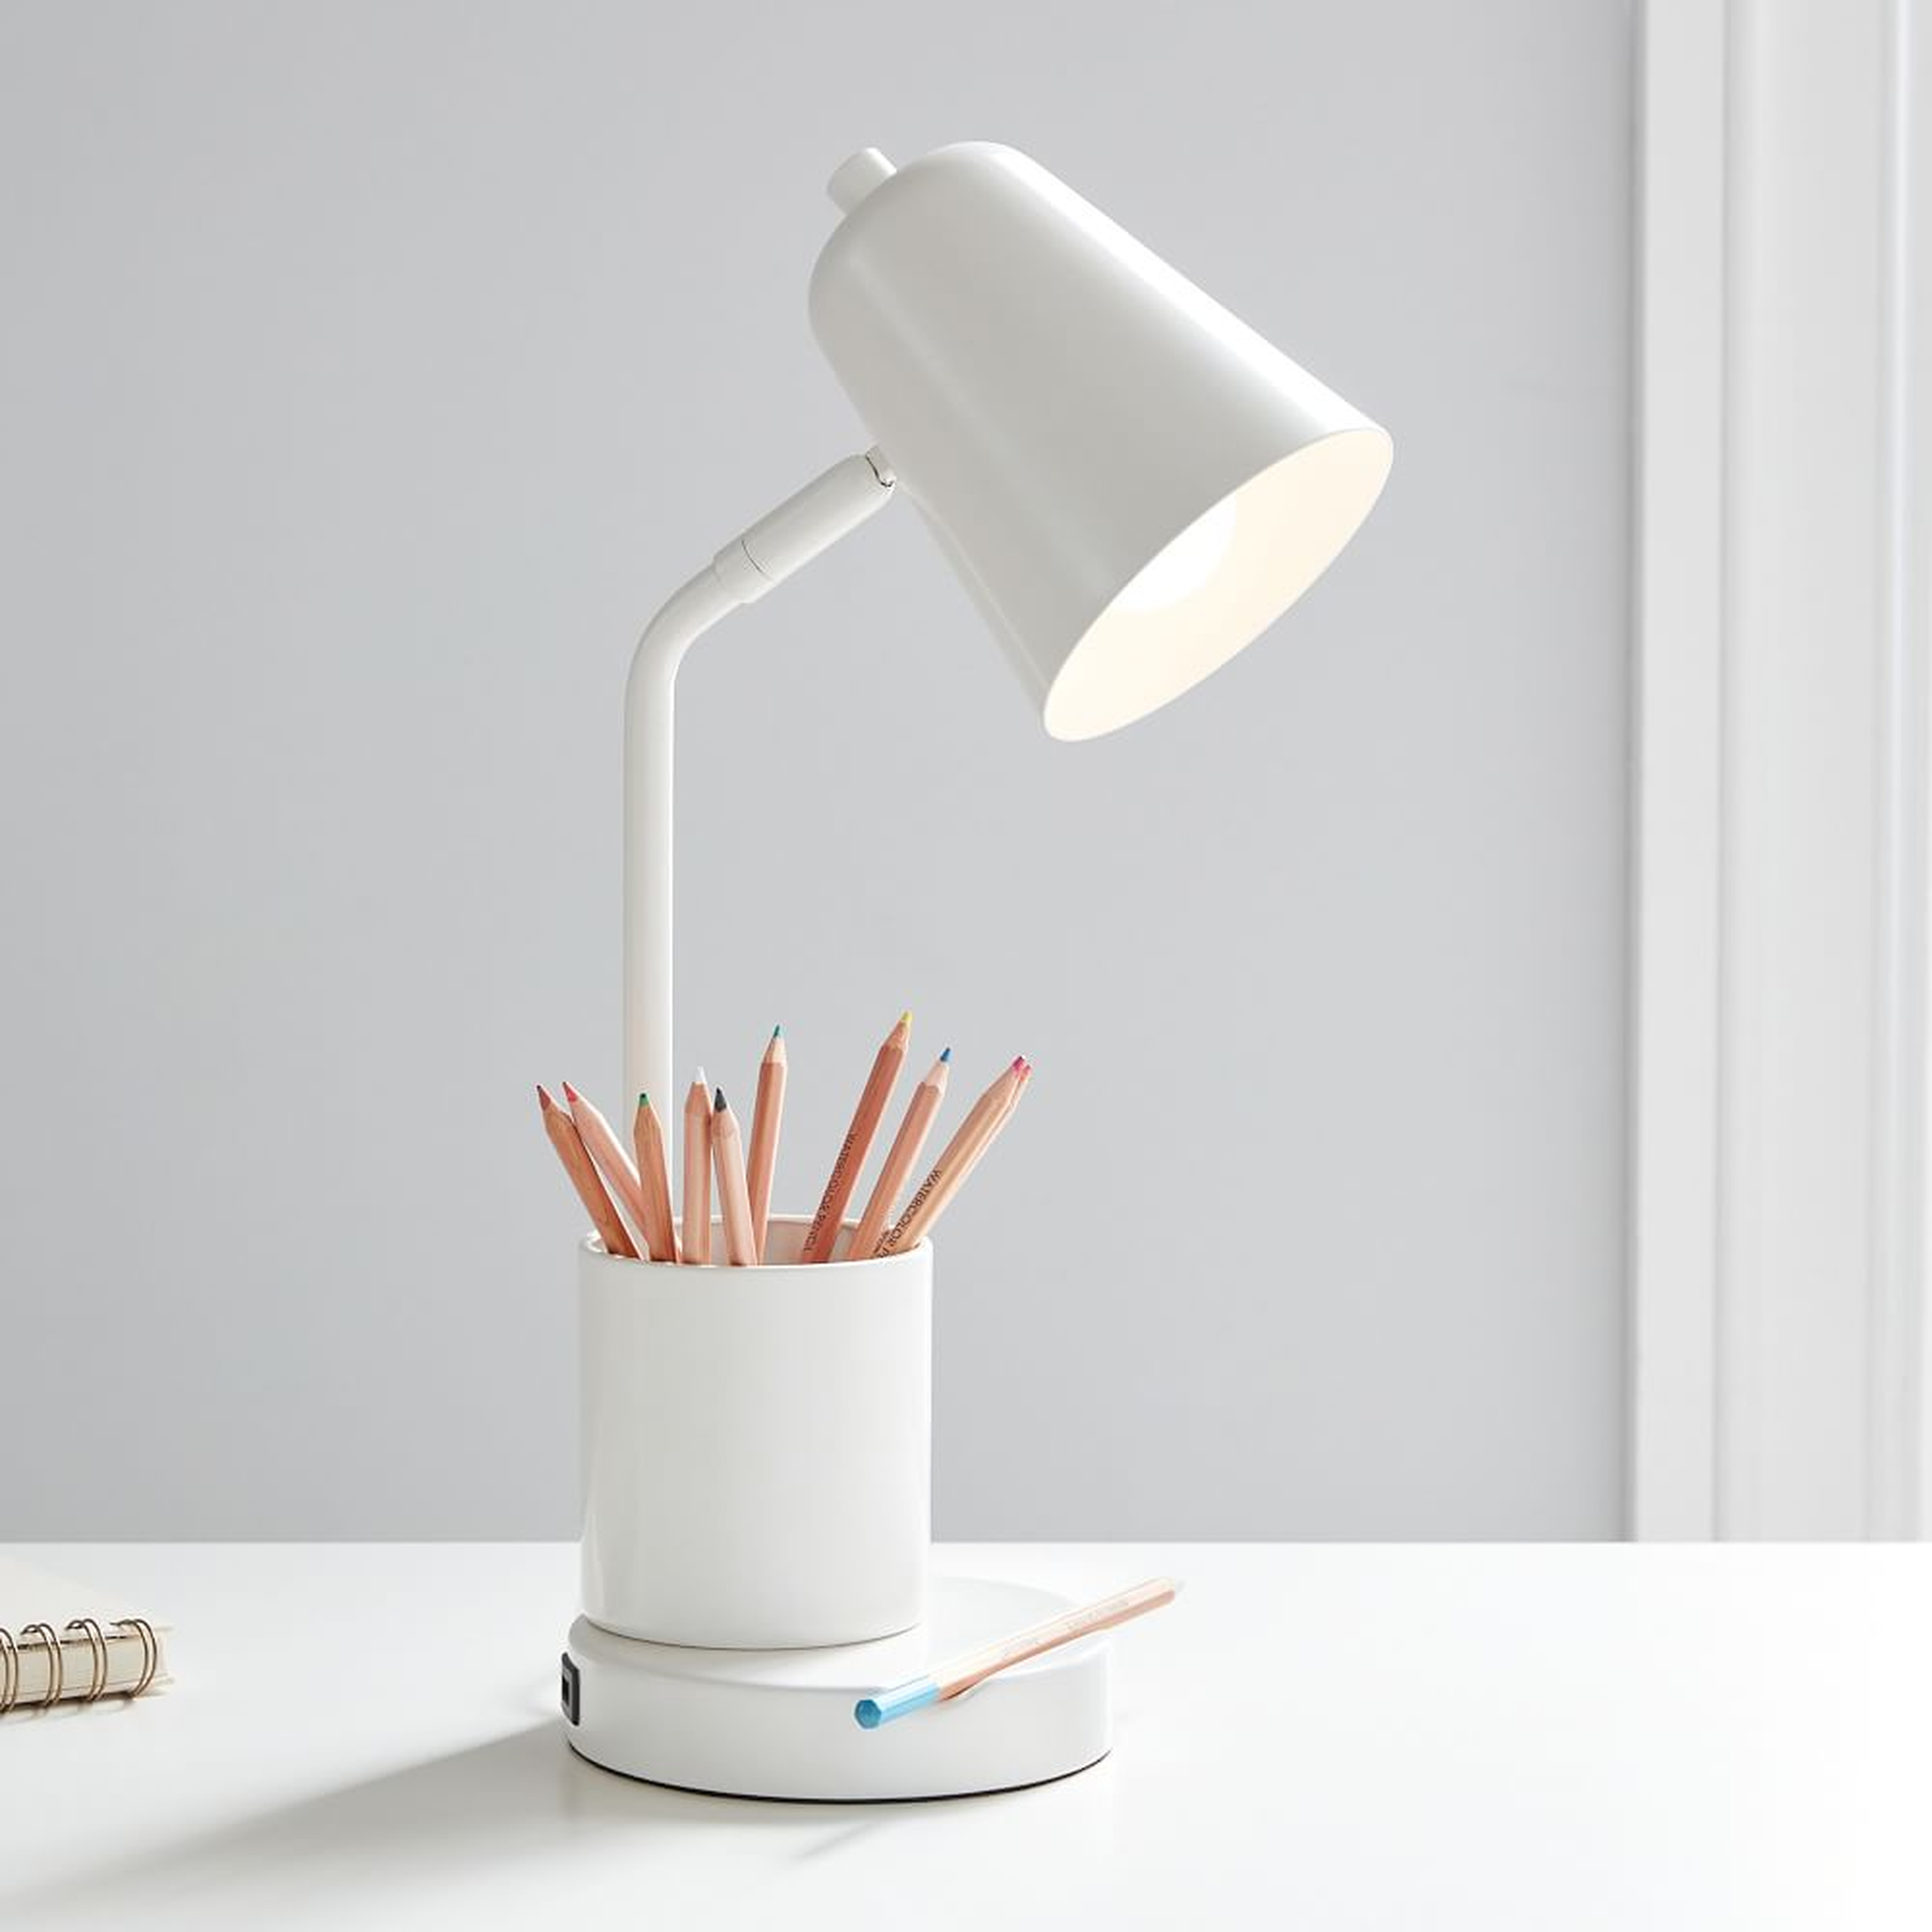 Modern Task Lighting With Storage, White, WE Kids - West Elm